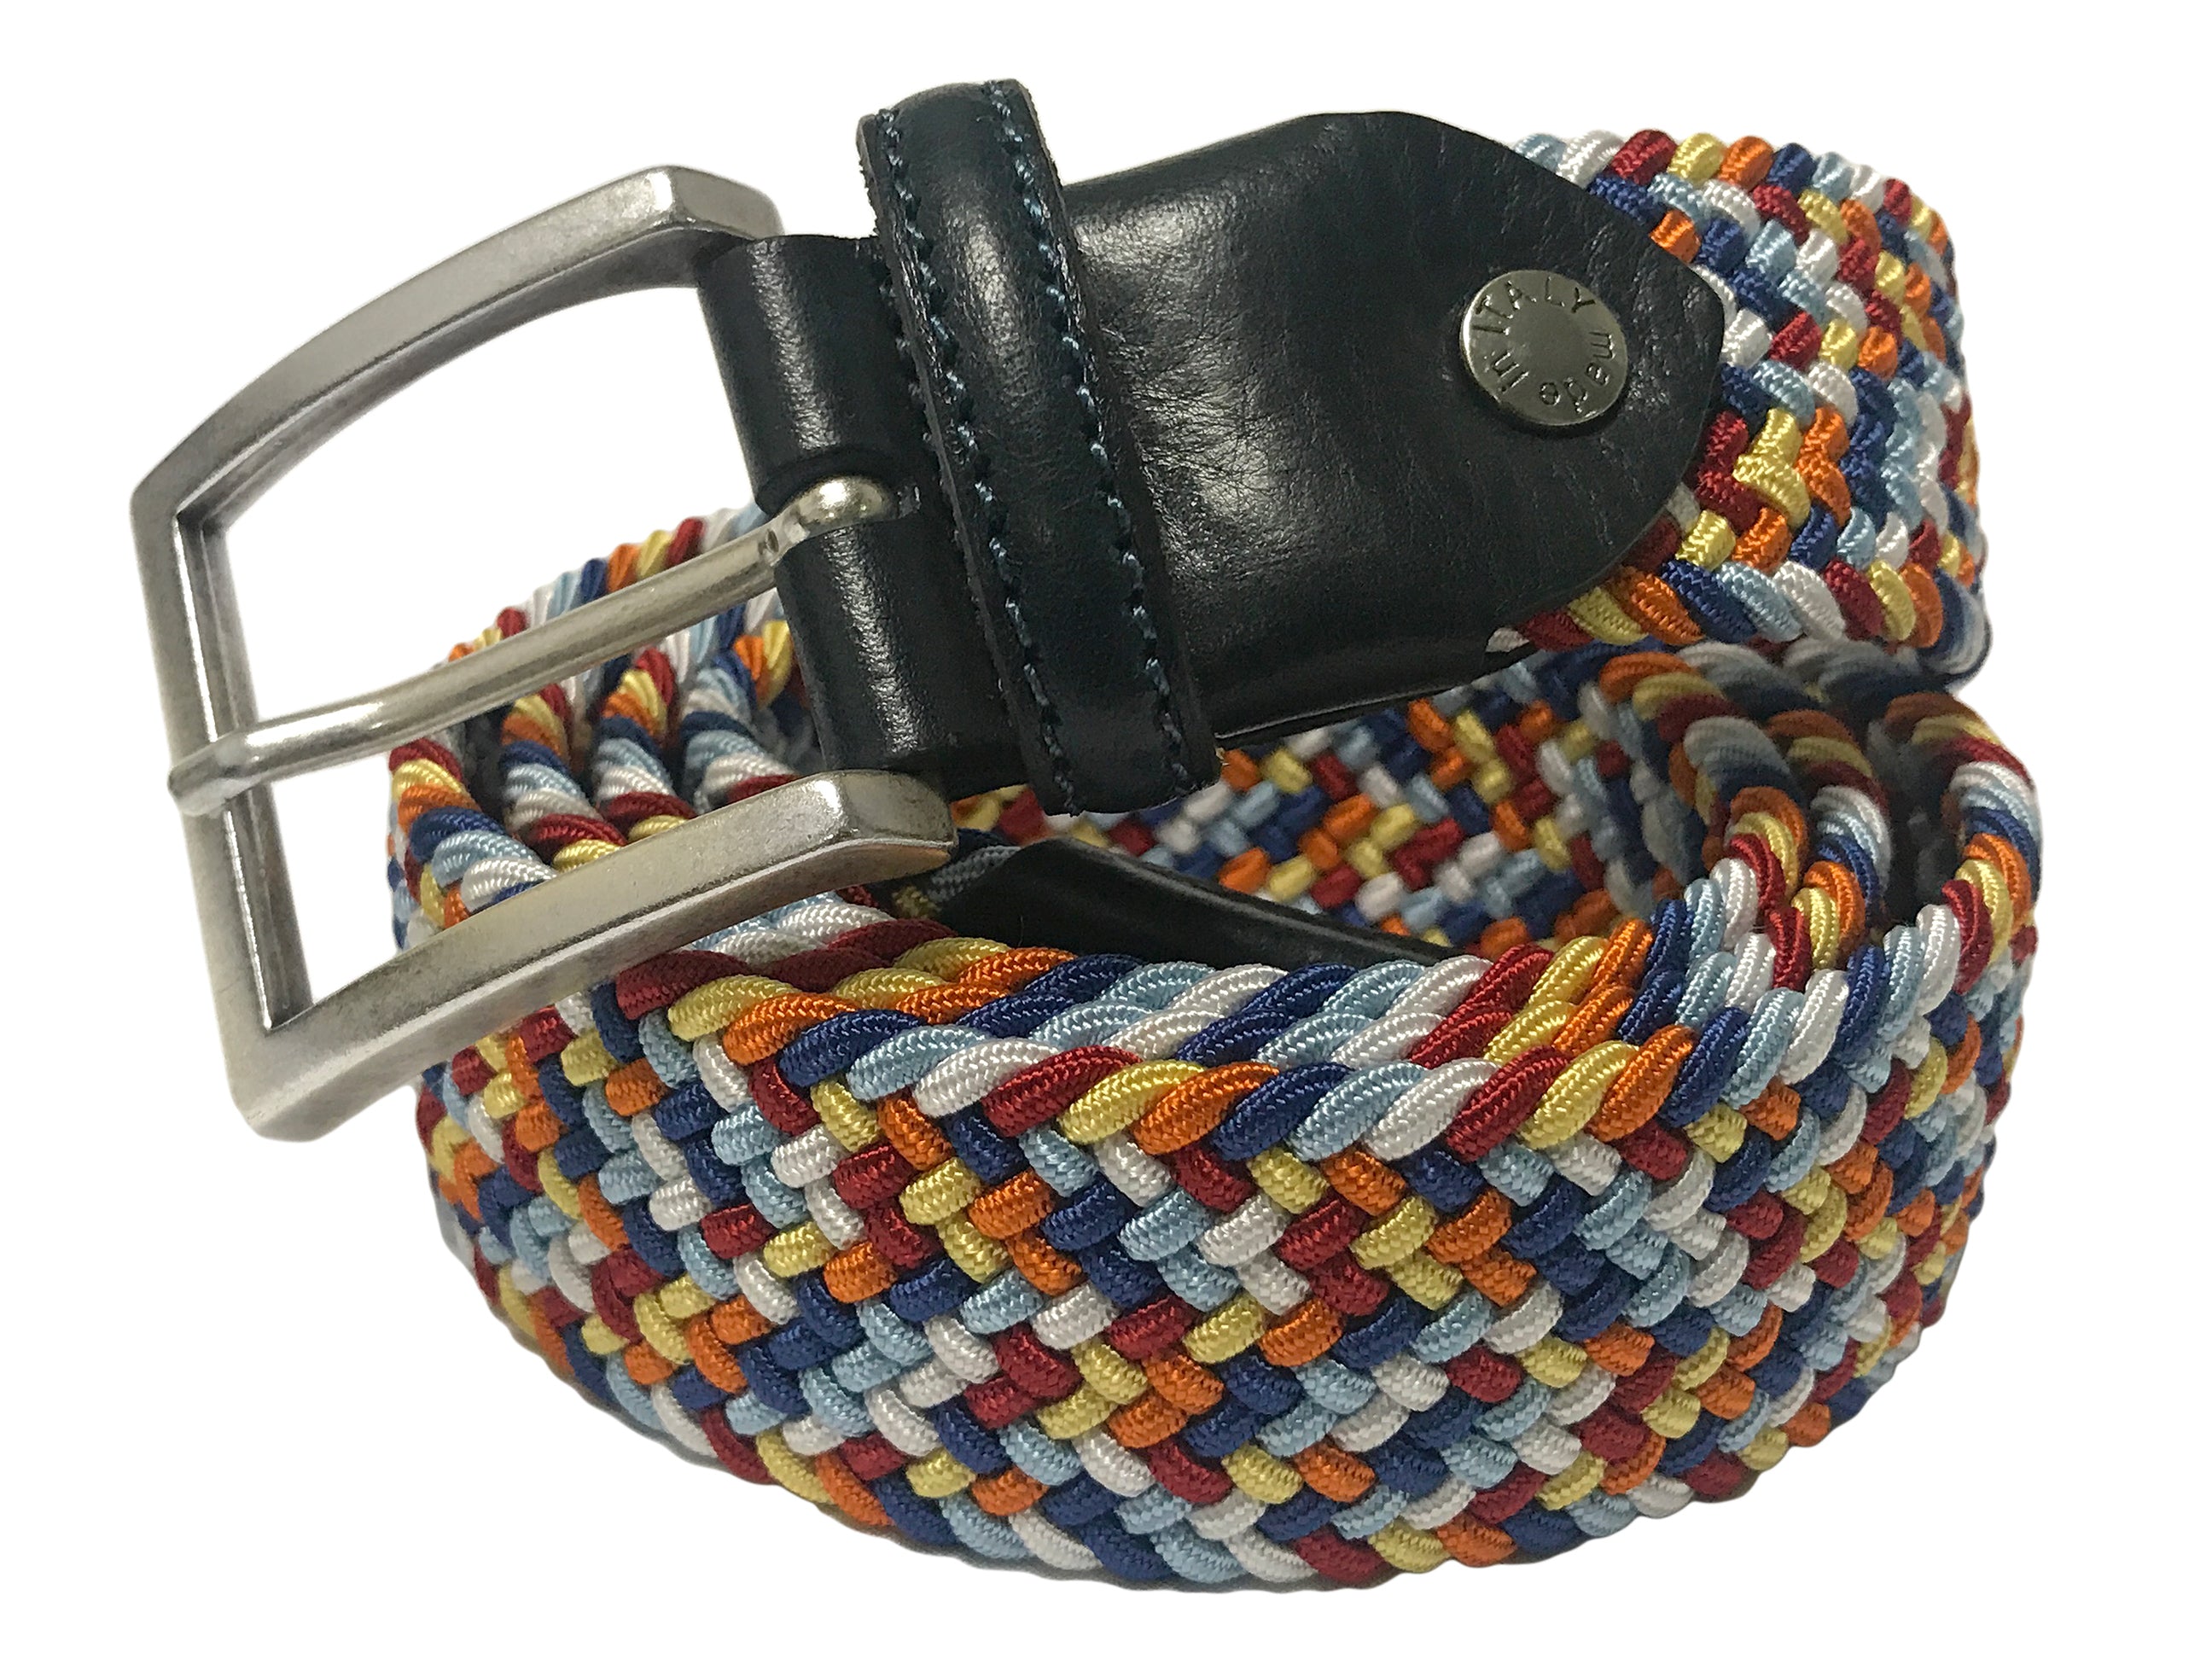 Home-X Braided Stretch Belt, Elastic Belts